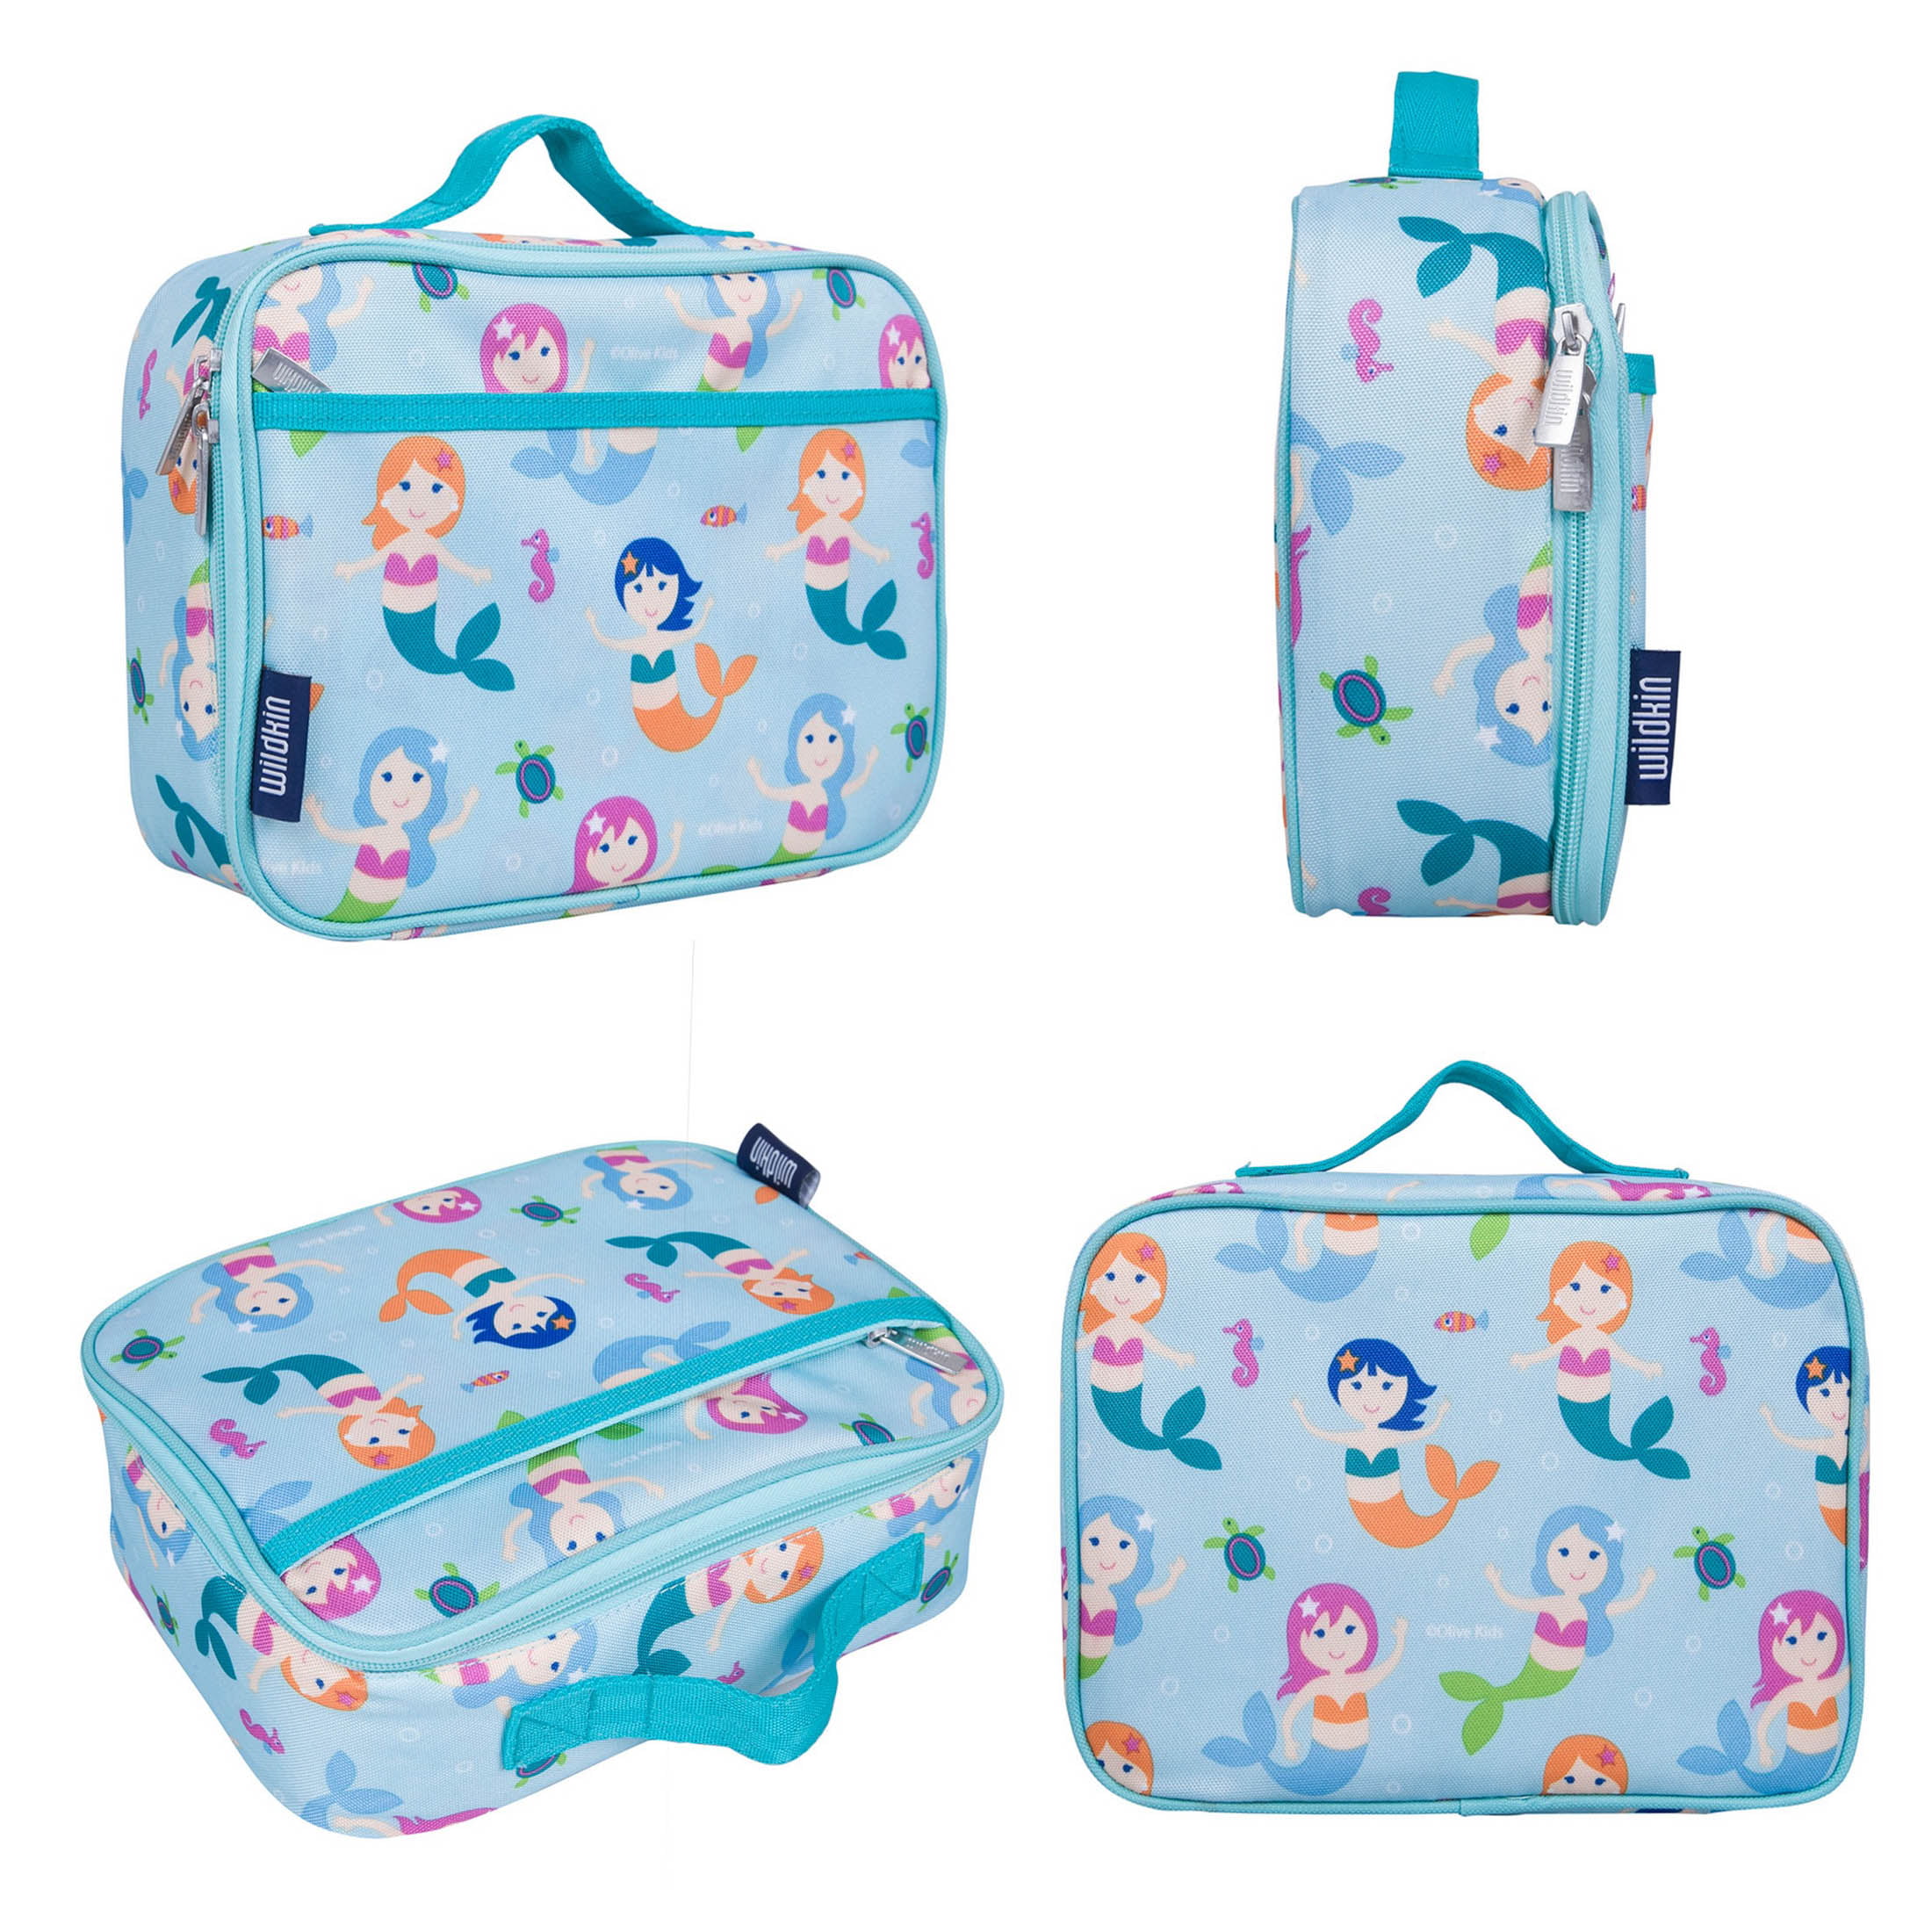 Wildkin Kids Insulated Lunch Box for Boy and Girls, BPA Free (Mermaids Blue)  - Walmart.com